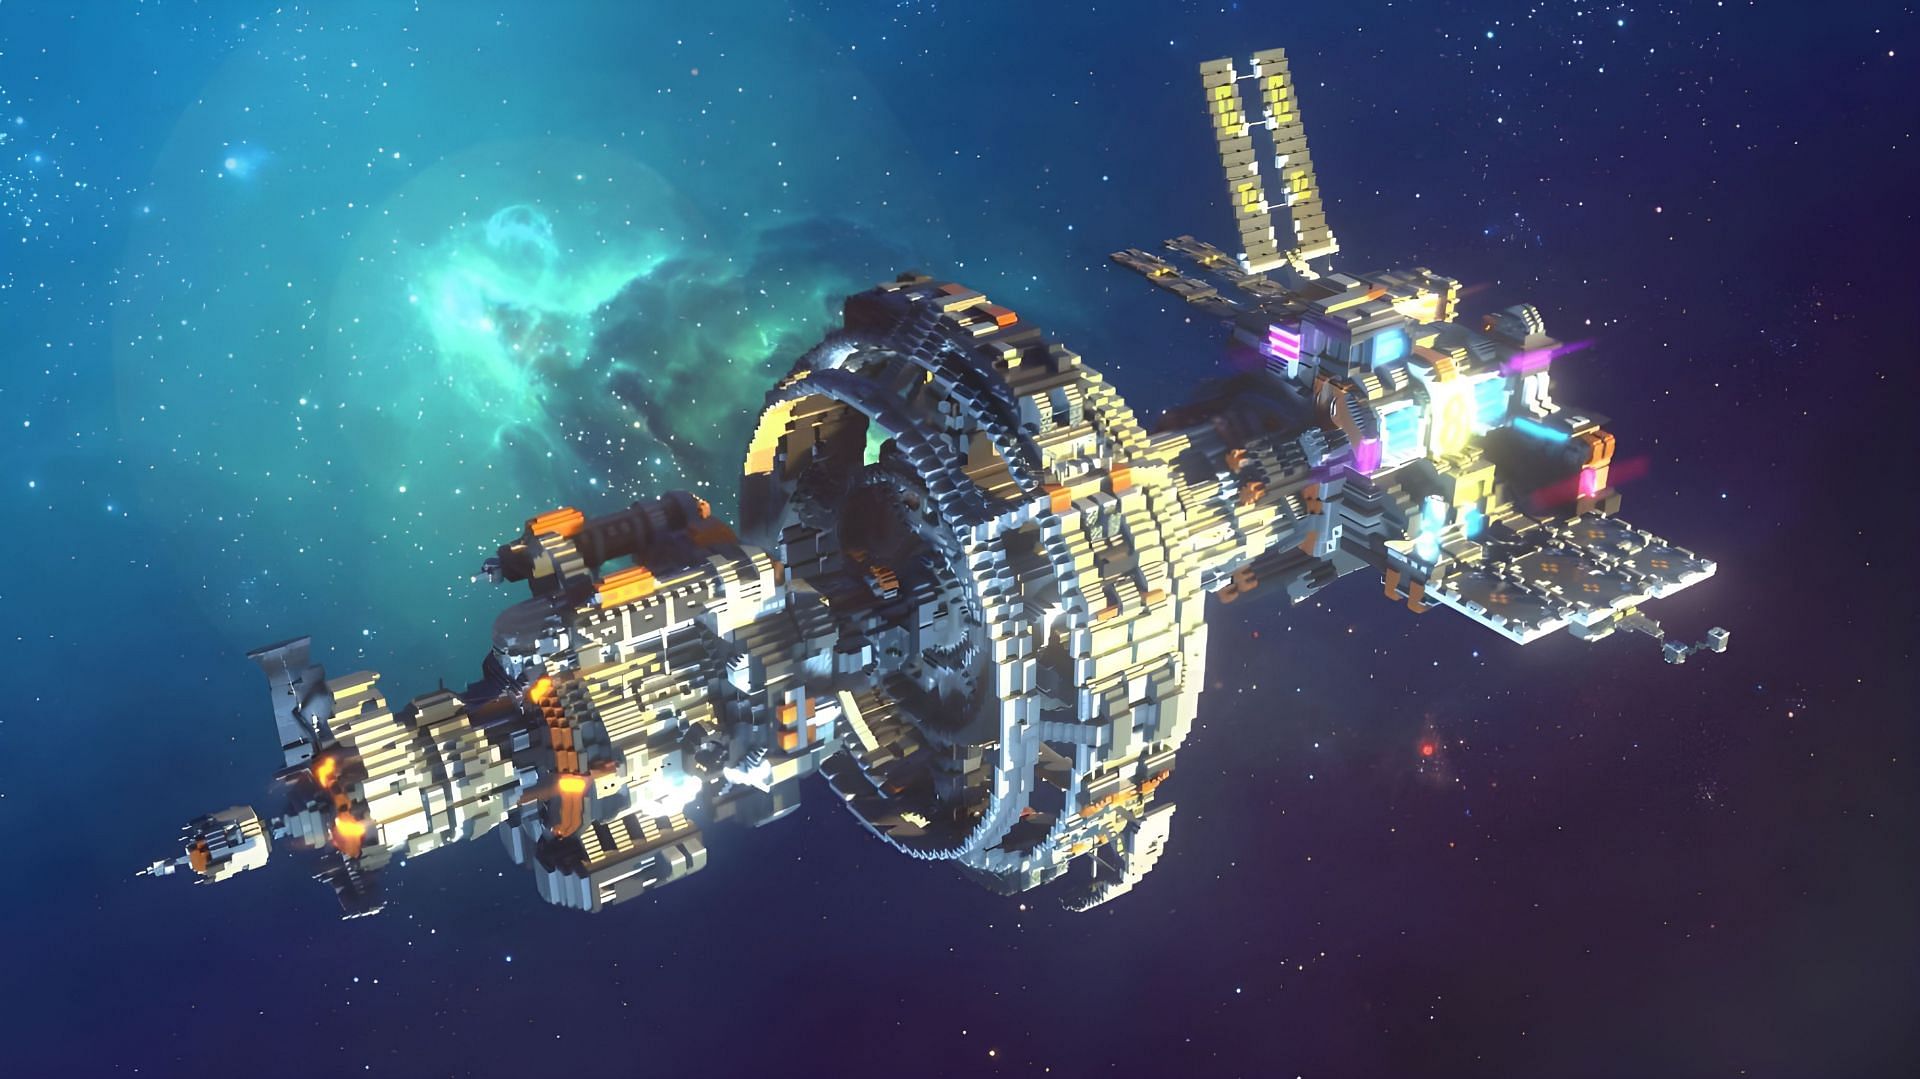 Space stations can make legendary Minecraft builds (Image via Reddit/u/Voenixx_)